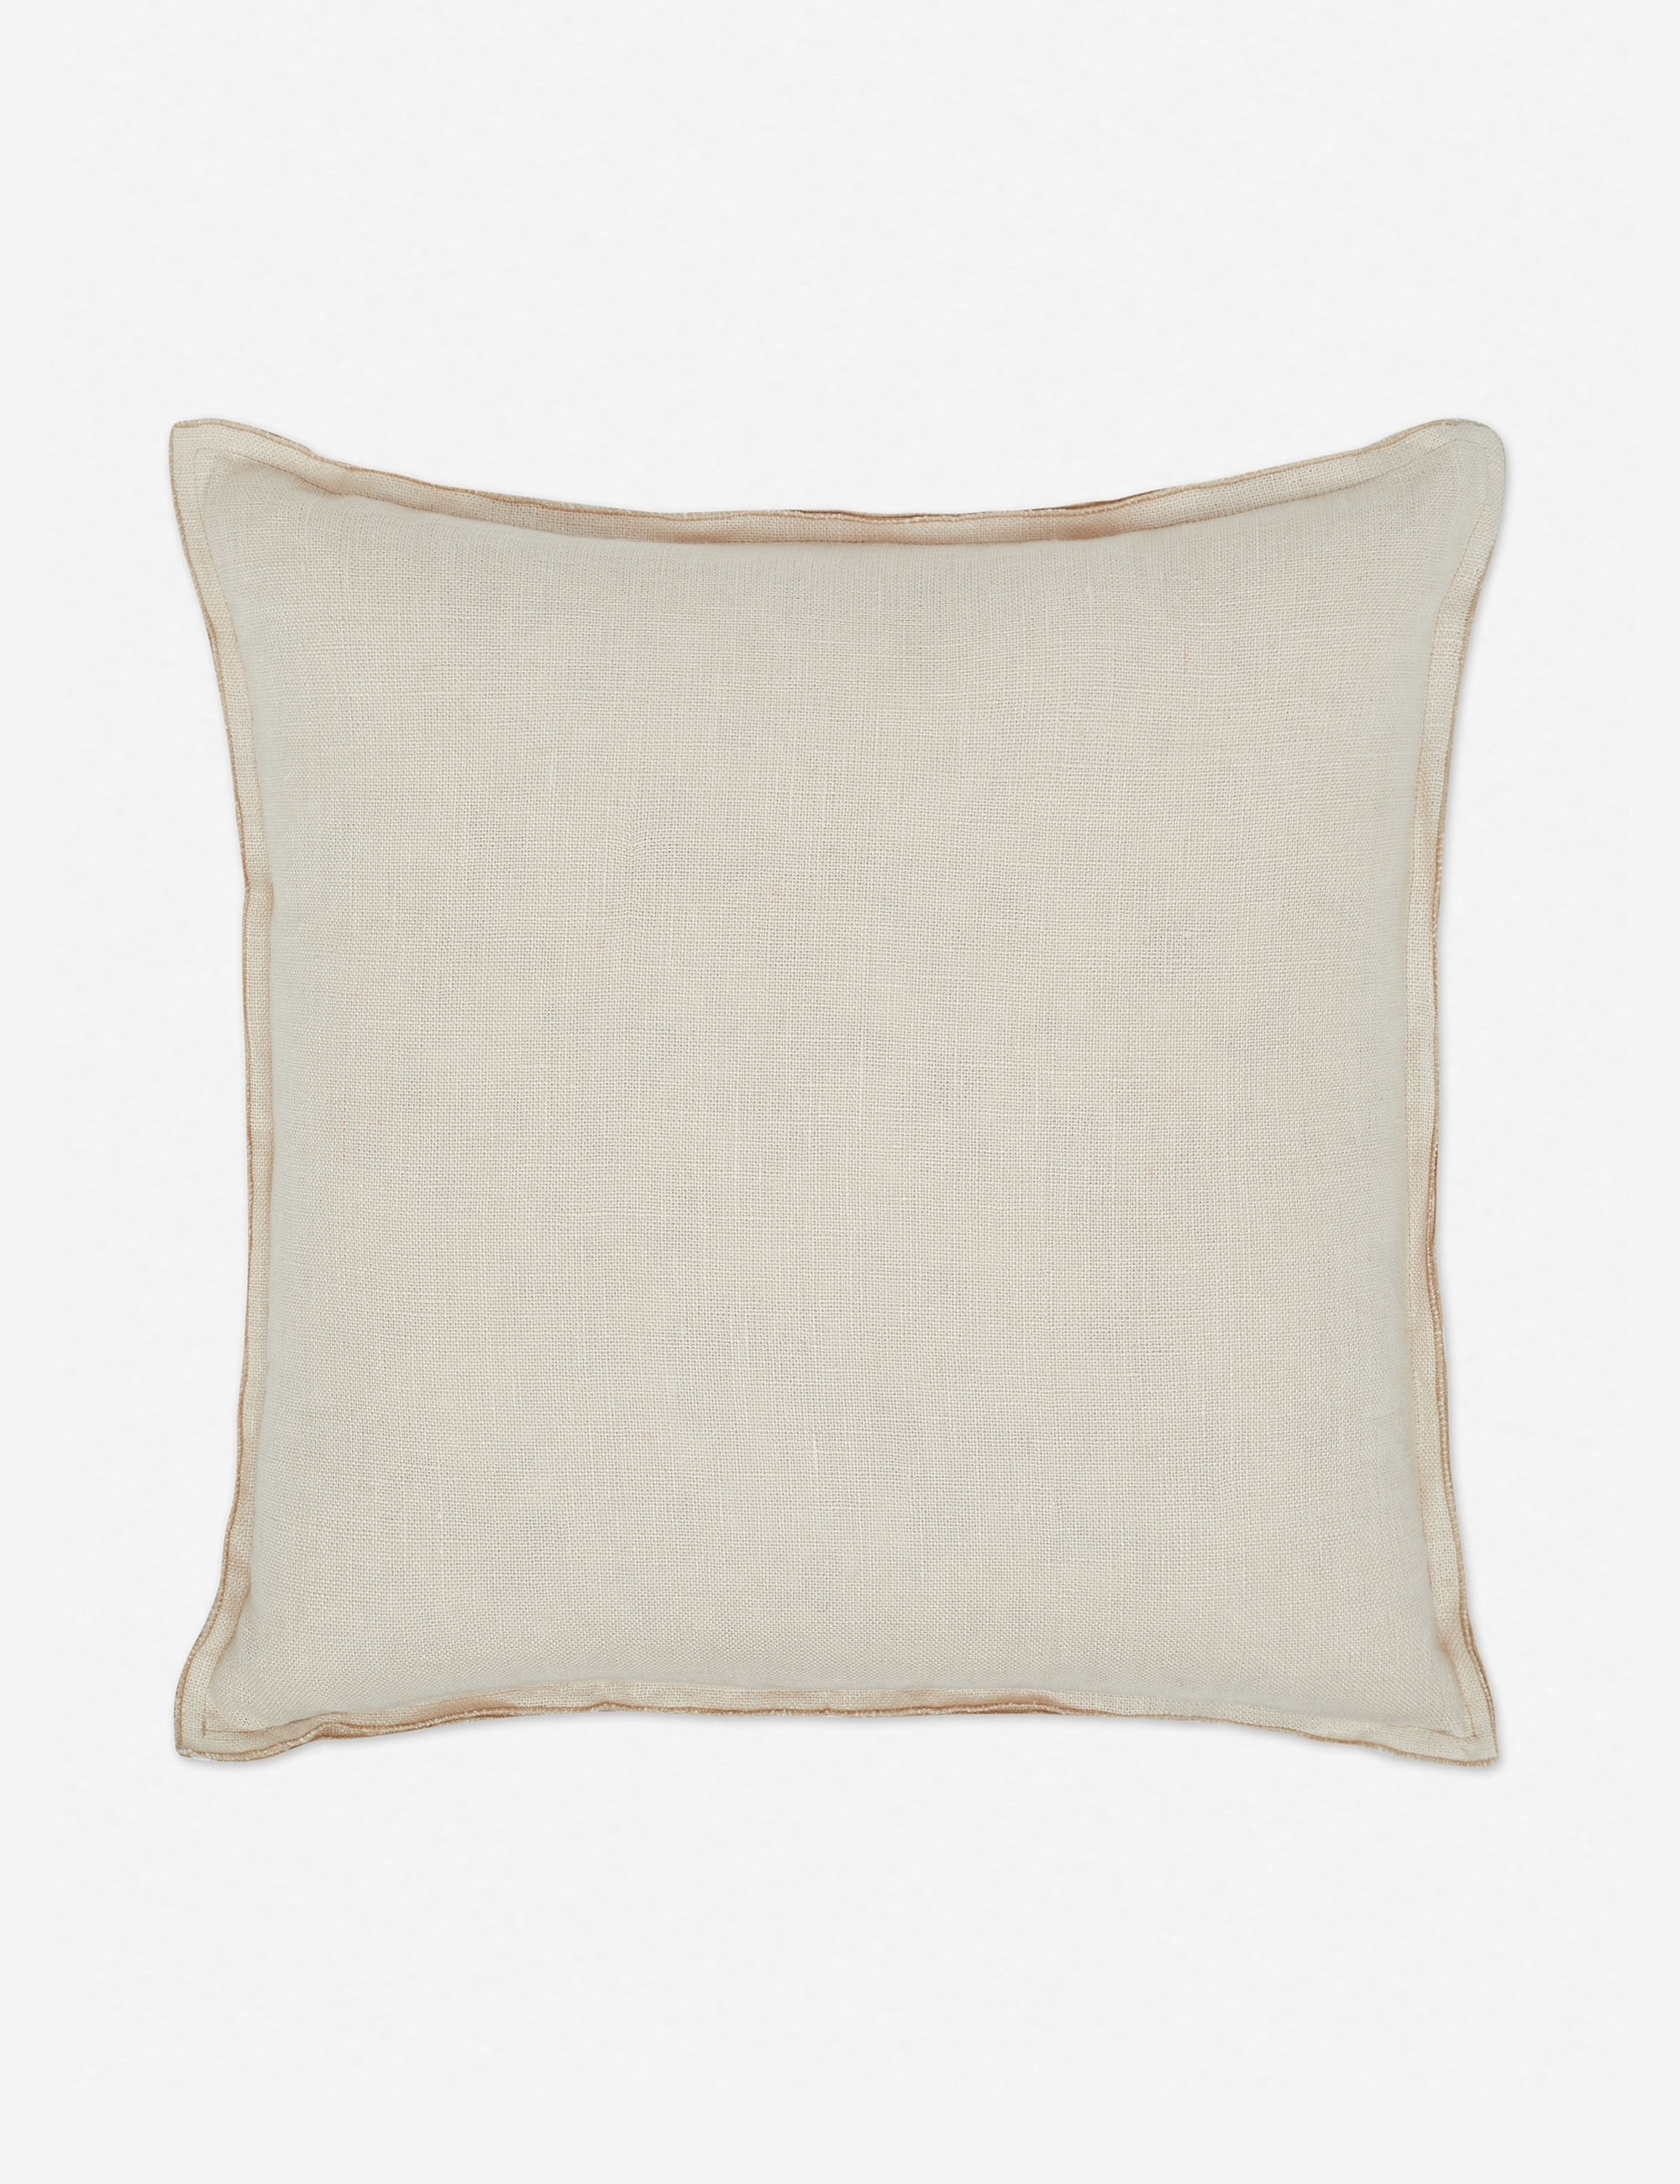 Arlo Linen Pillow, Light Natural - Image 2